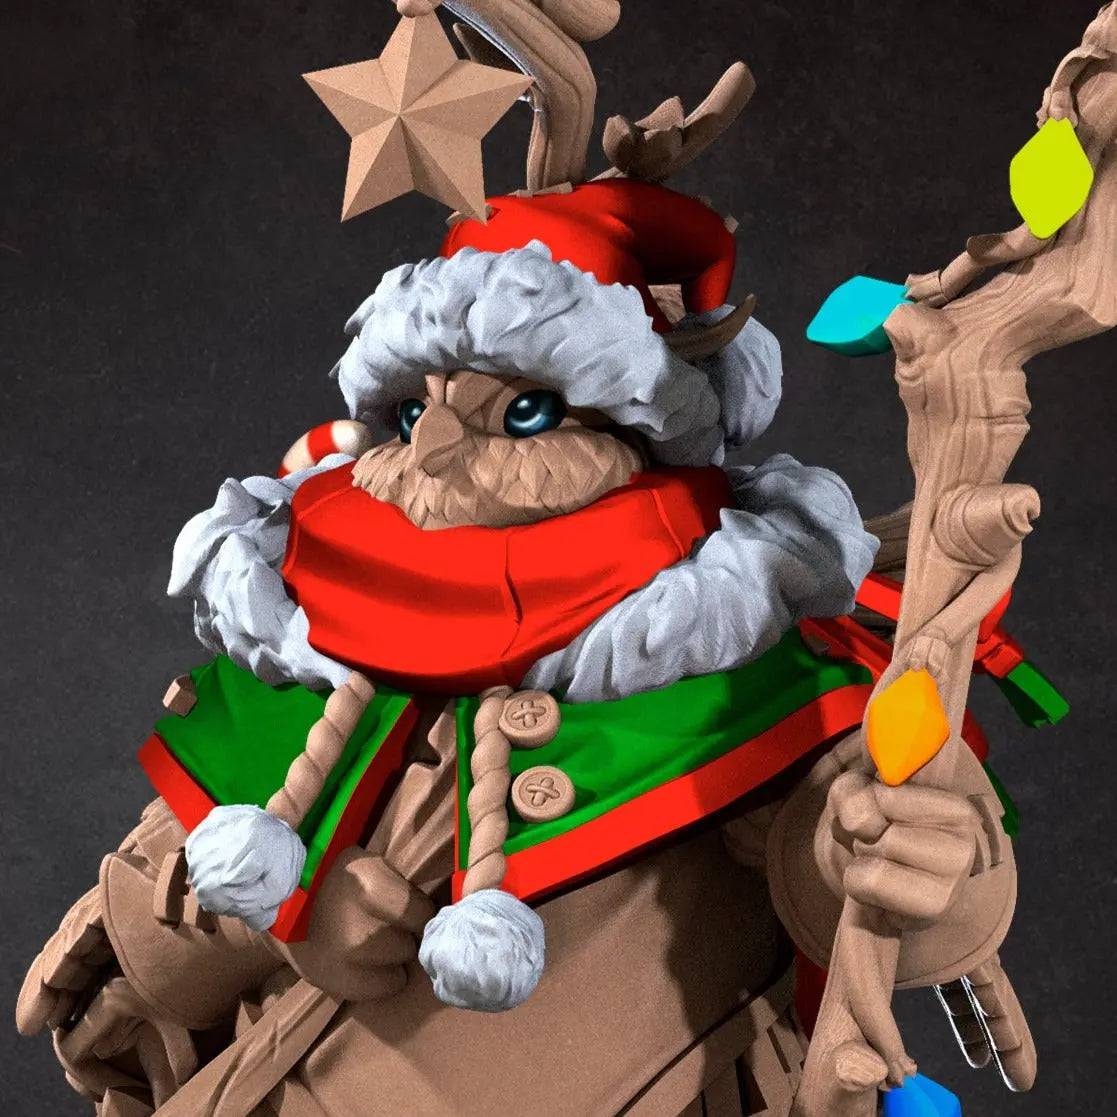 Uka, Owlfolk Forest Keeper - Christmas Yule Version | D&D Miniature TTRPG Character | Bite the Bullet - Tattles Told 3D